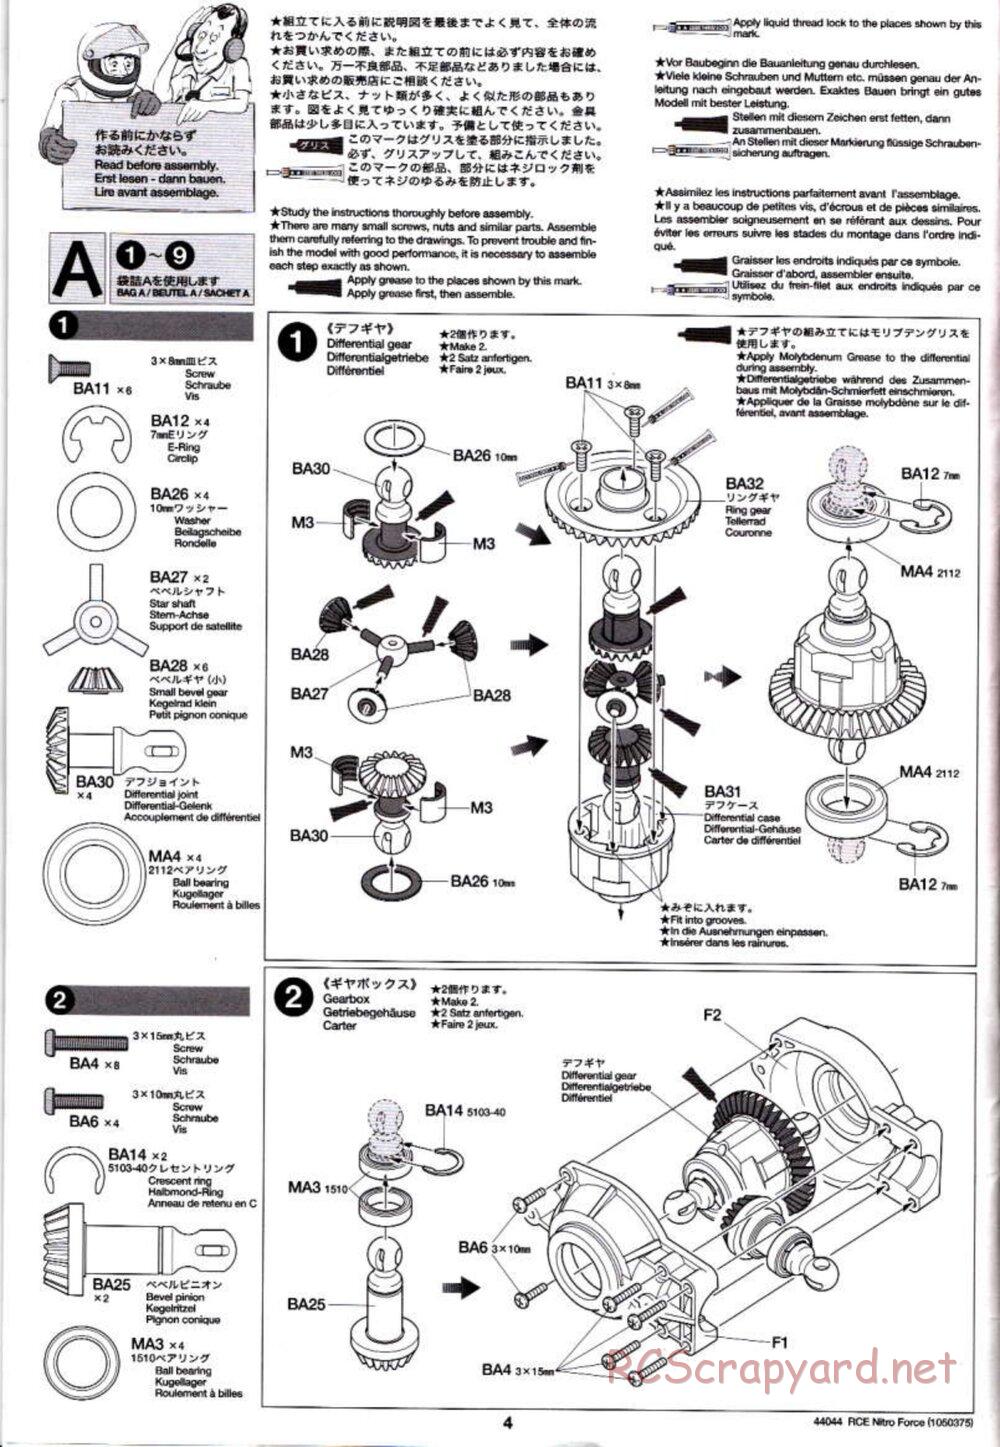 Tamiya - Nitro Force - NDF-01 Chassis - Manual - Page 4